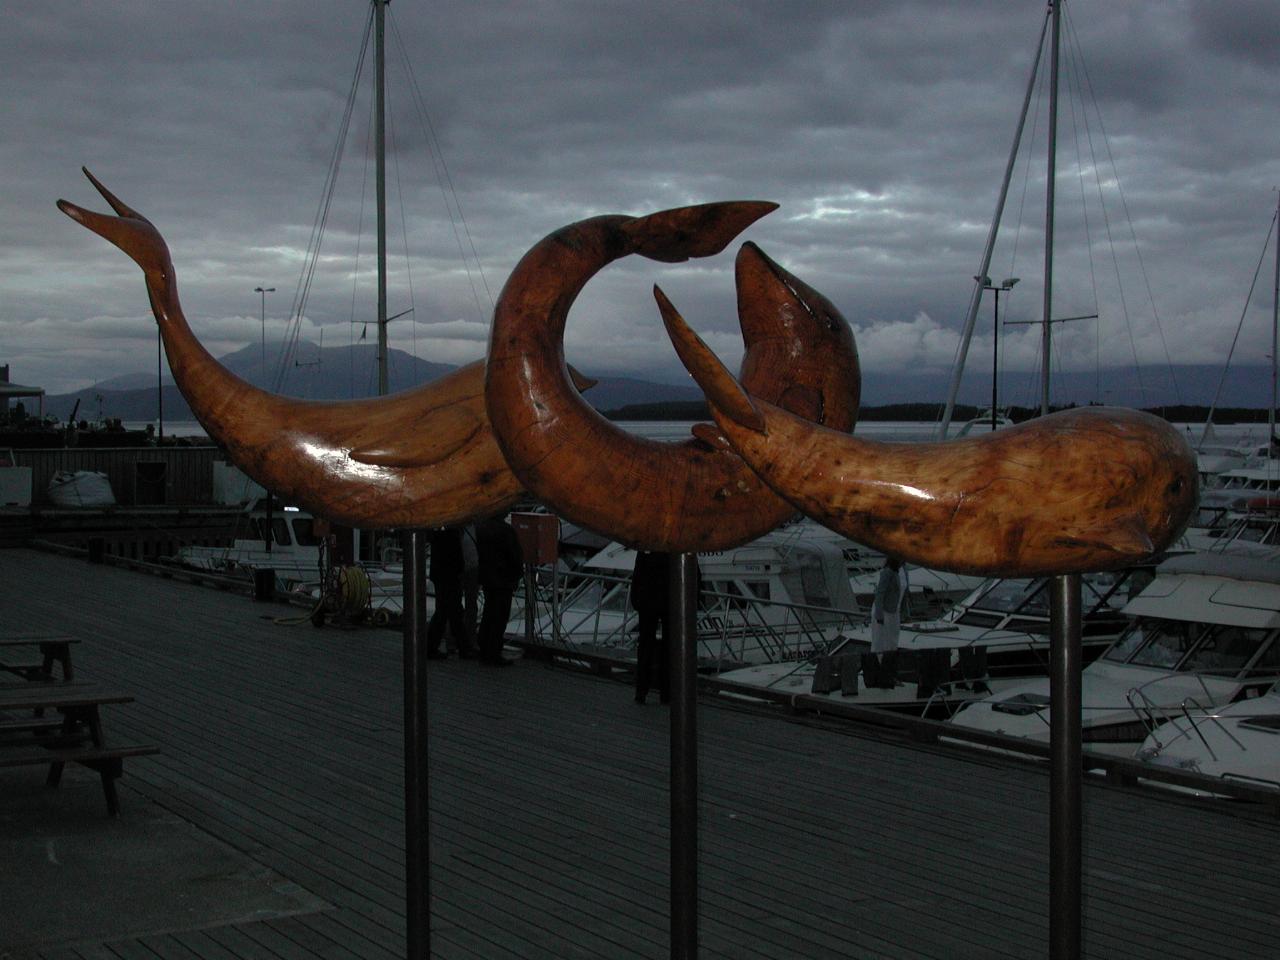 KPLU Viking Jazz: Sculptures at yacth basin in Molde